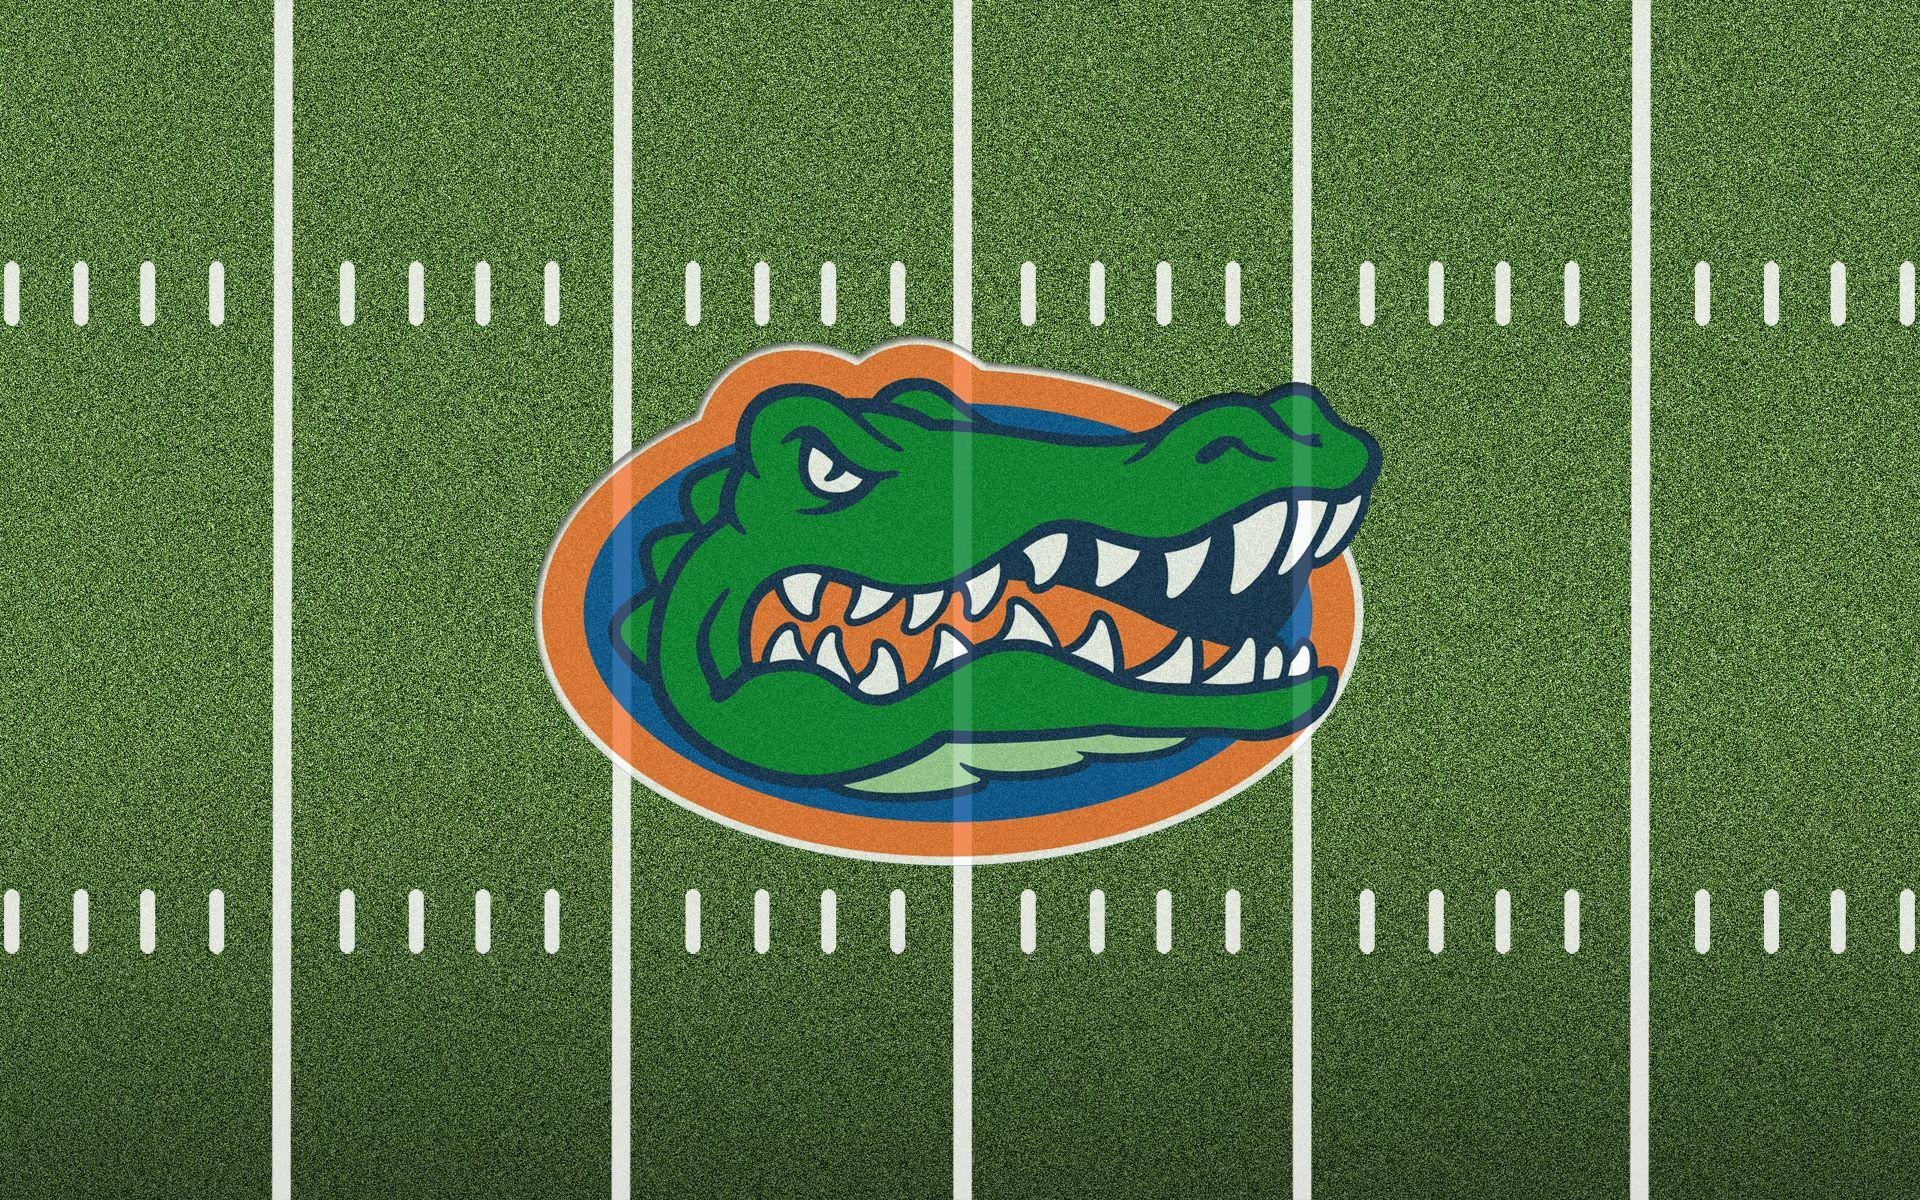 College Football Field Wallpaper. Football Fields. Florida gators